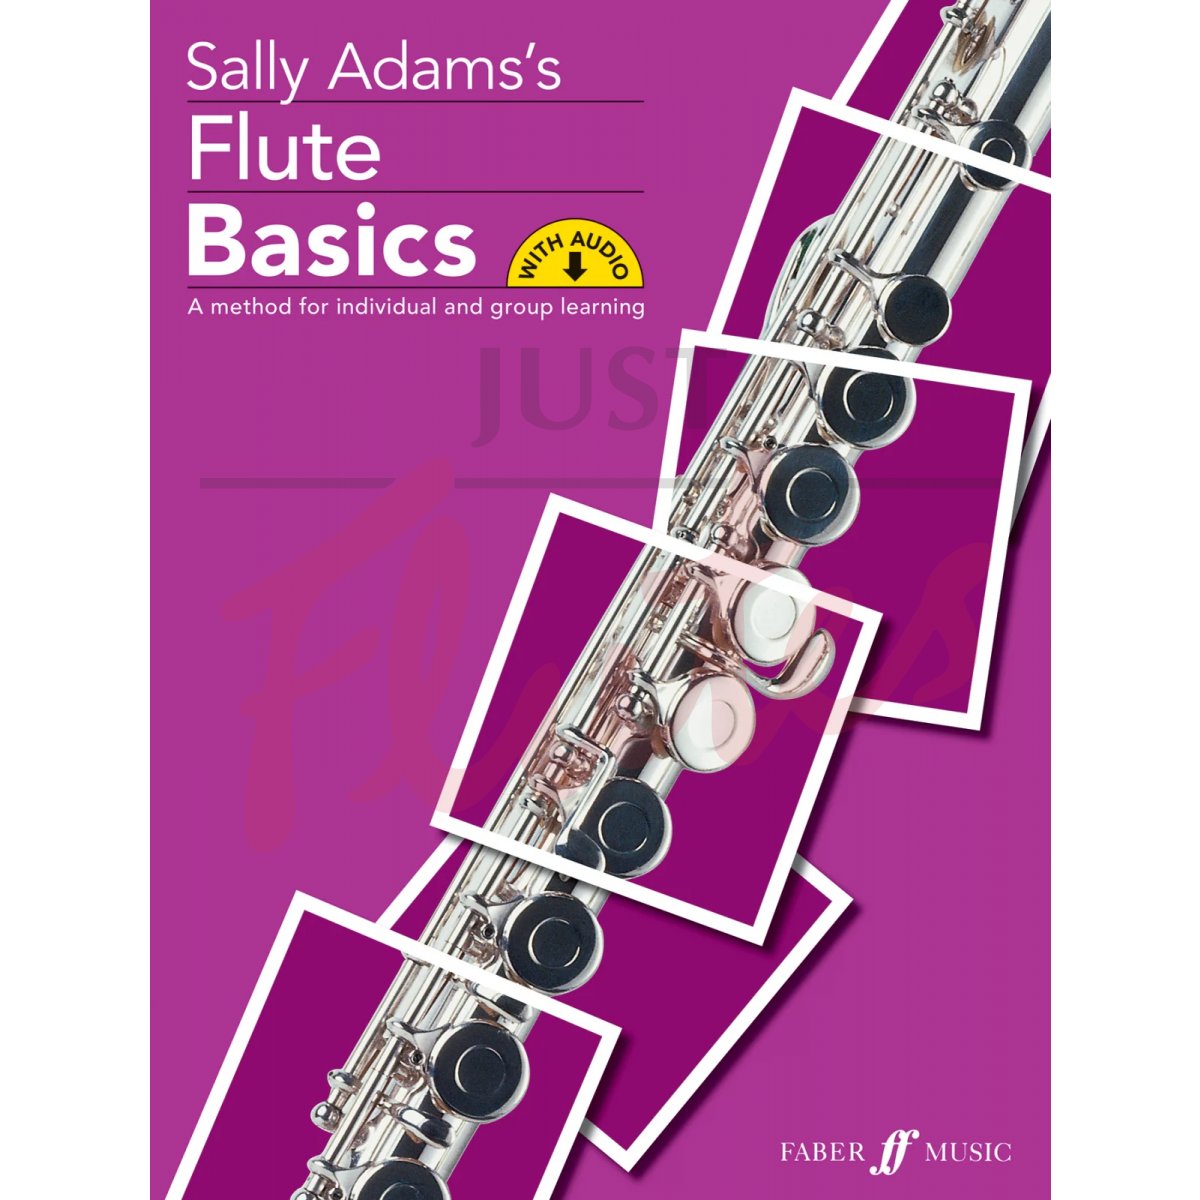 Flute Basics [Pupil's Book]